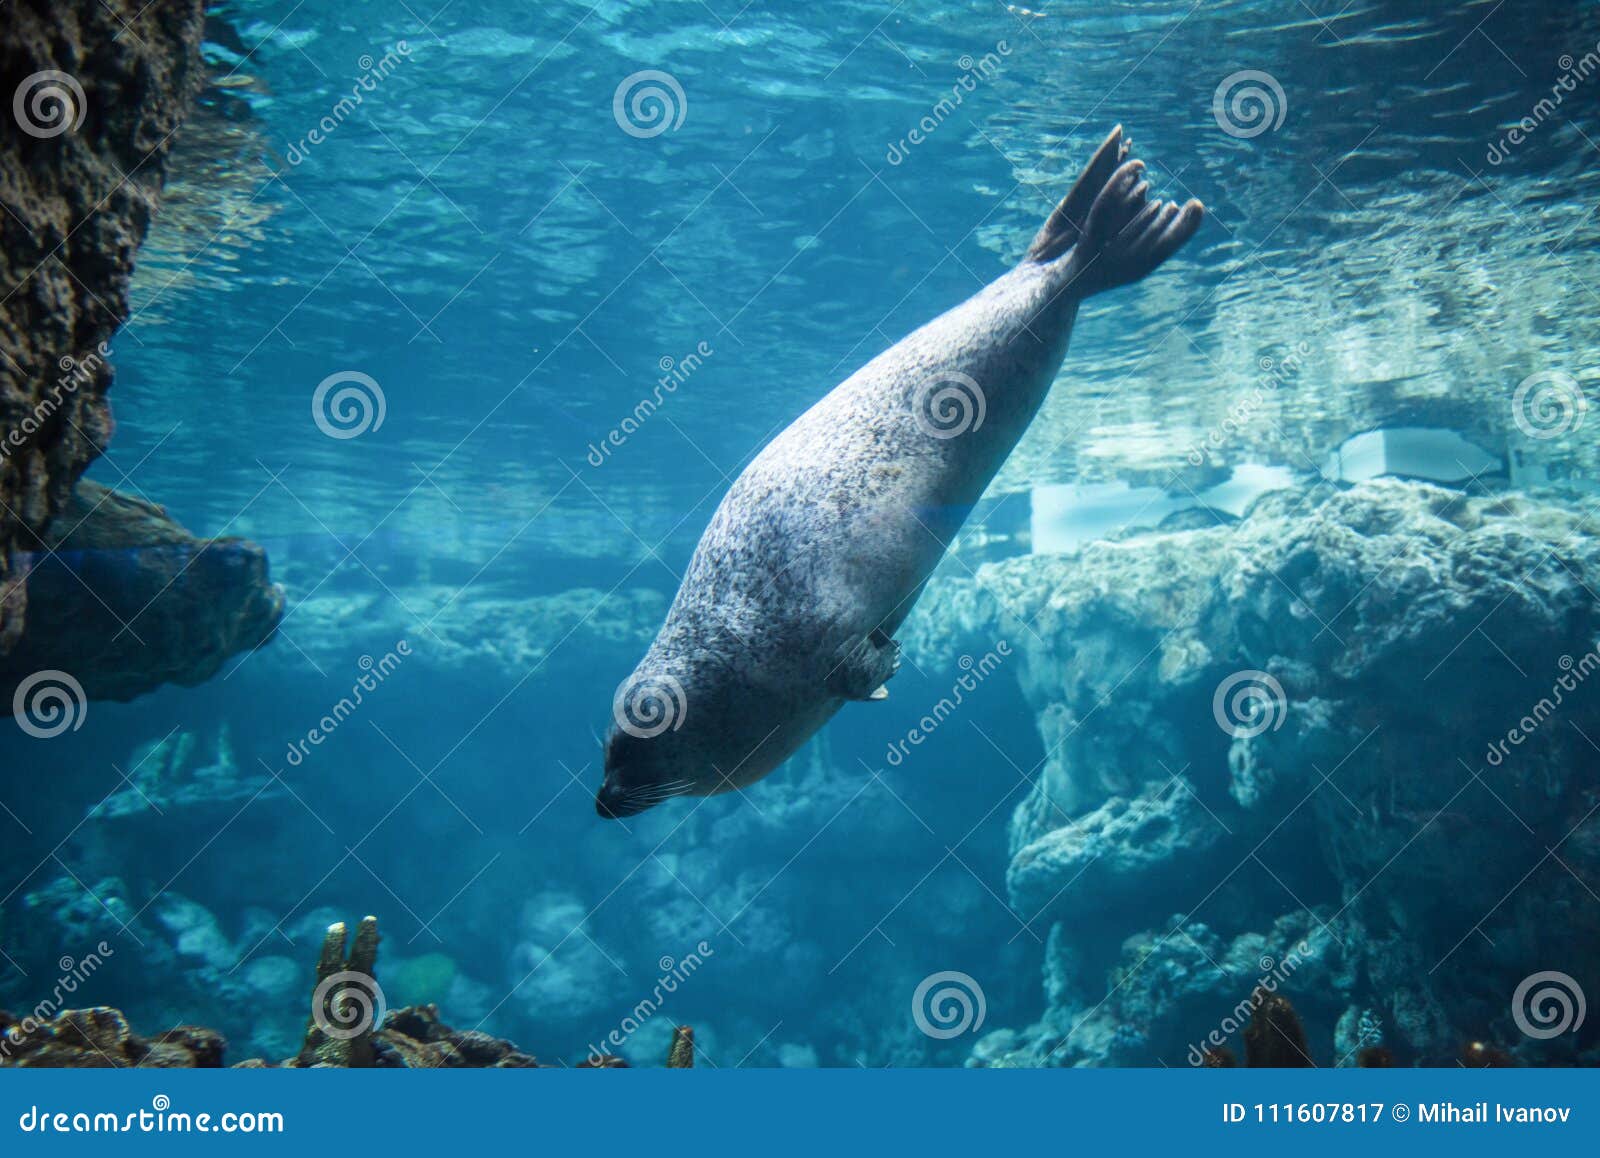 harbor seal, phoca vitulina